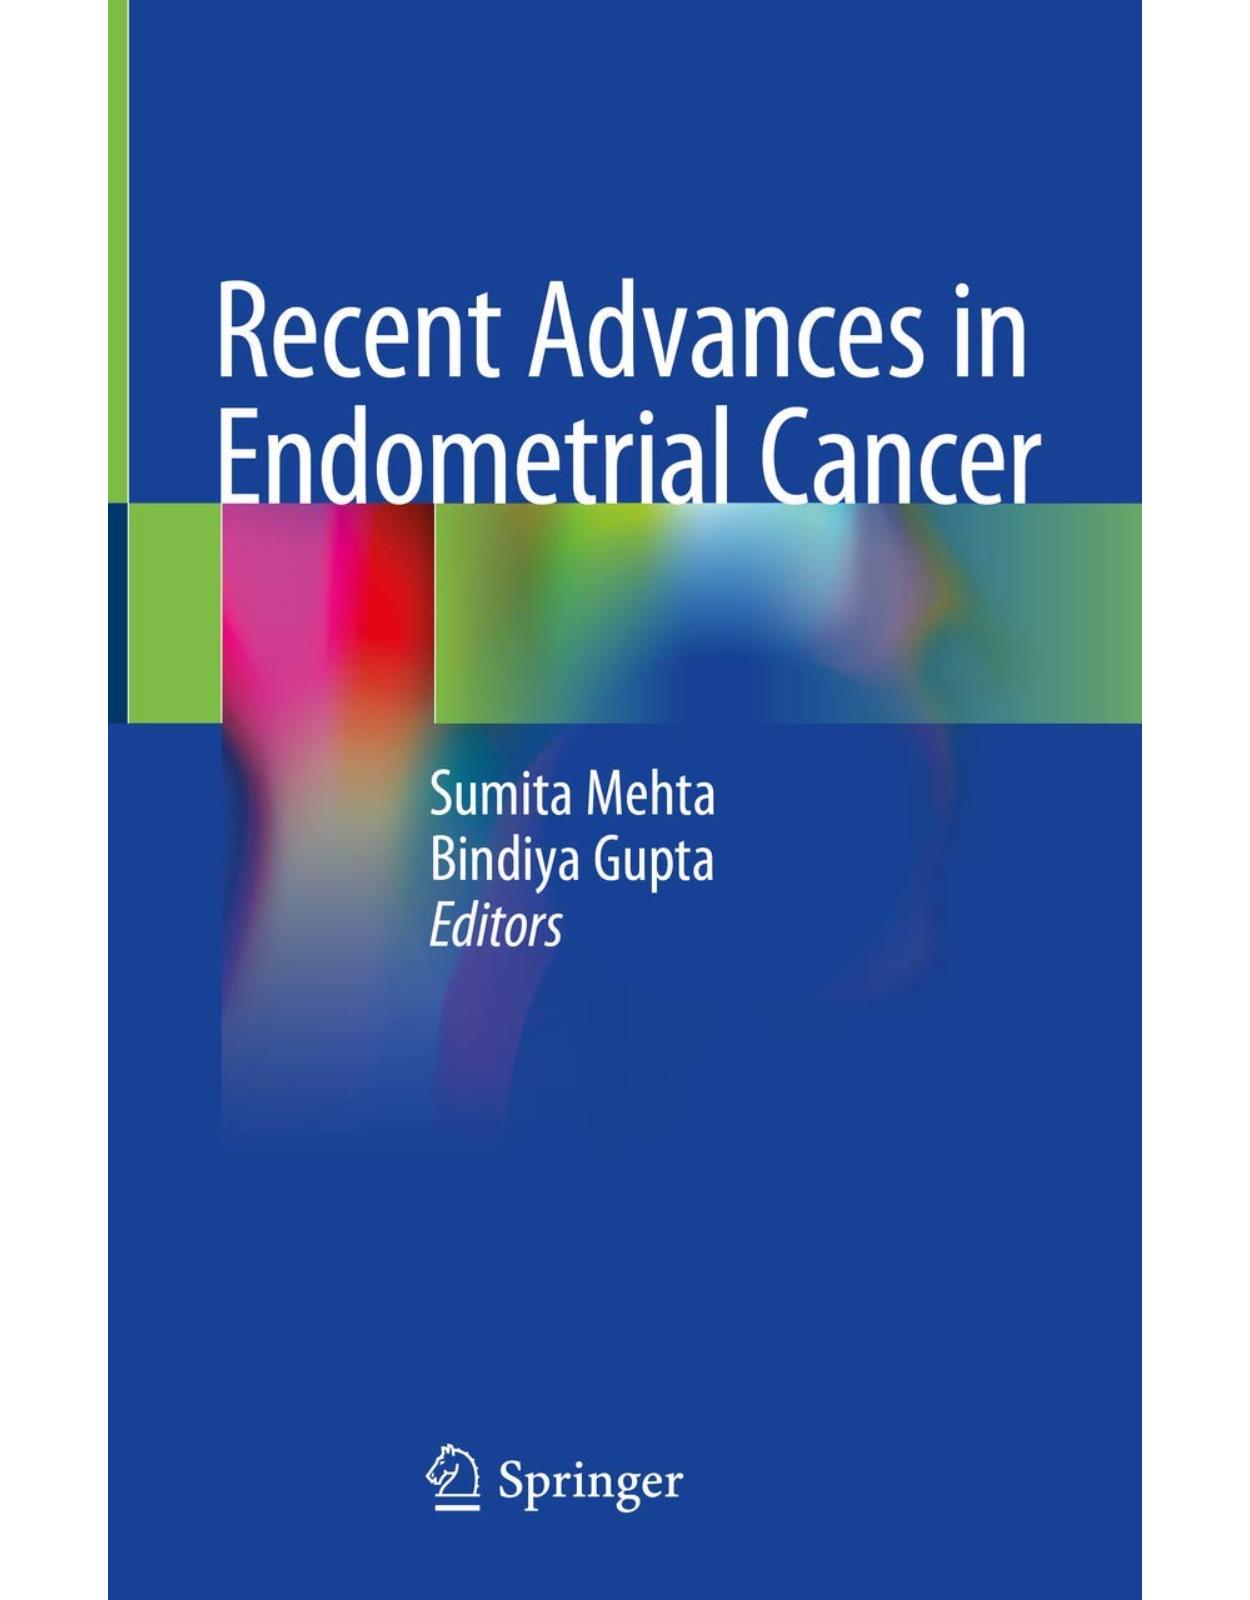 Recent Advances in Endometrial Cancer